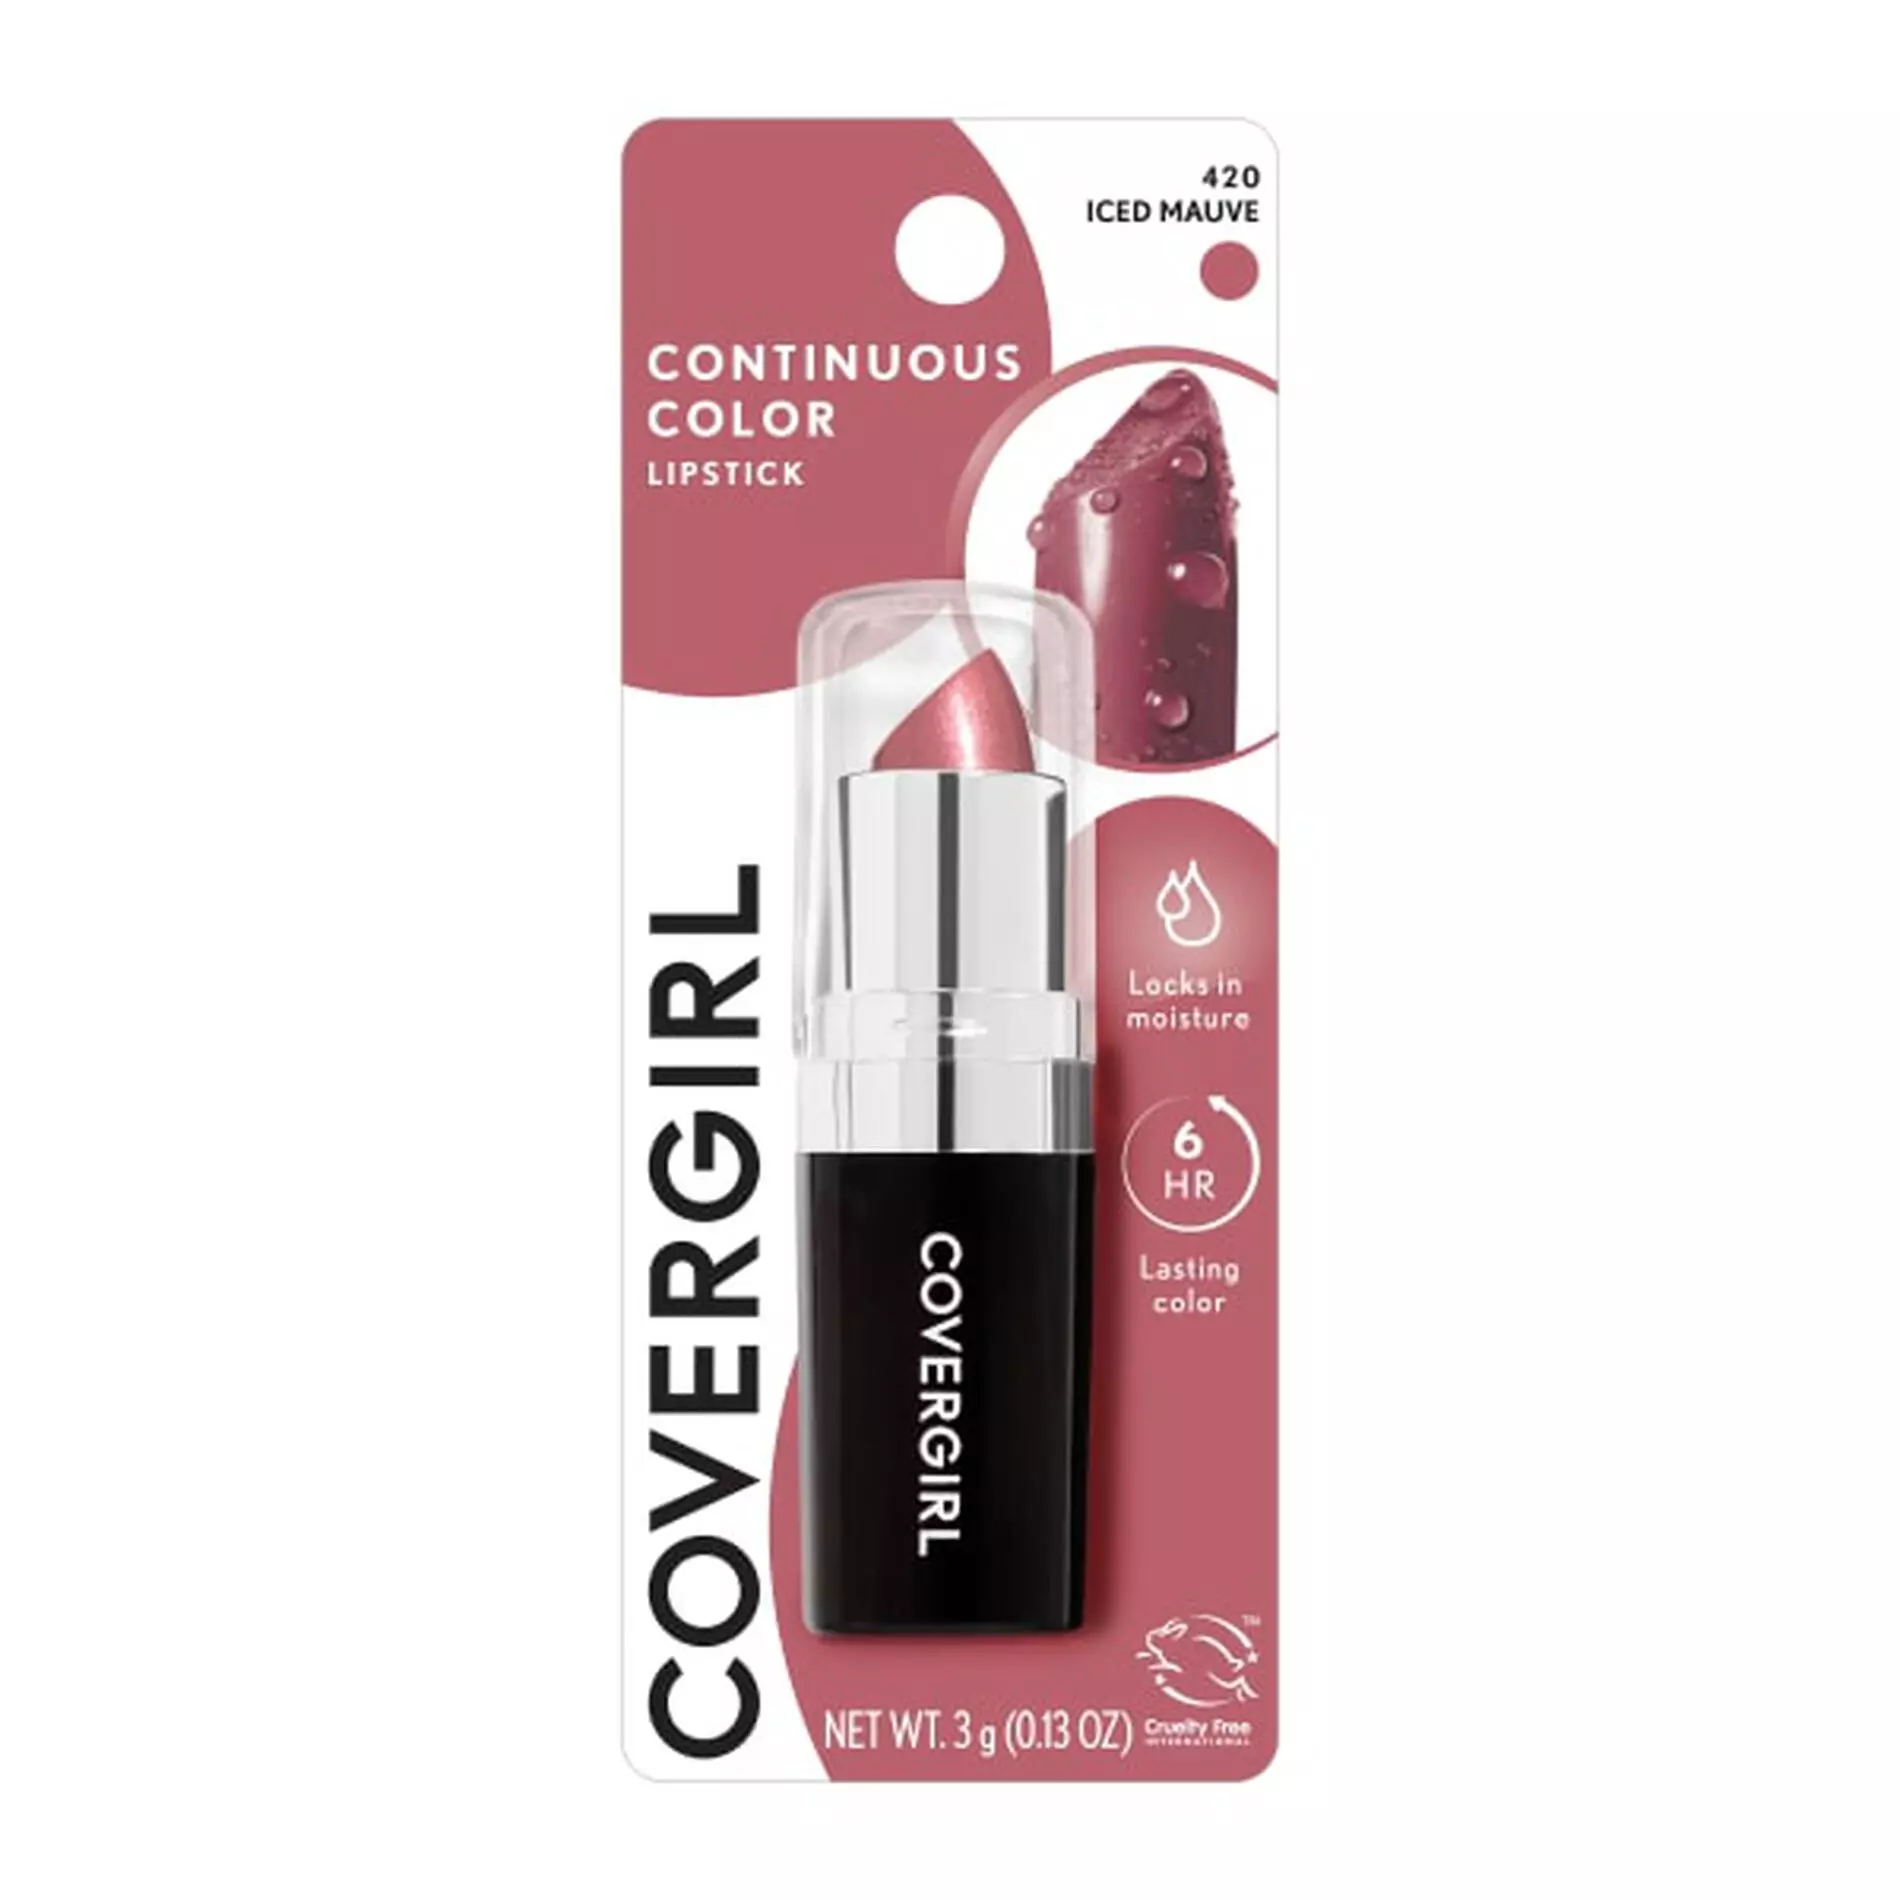 COVERGIRL Continuous Color Lipstick – Ice Mauve